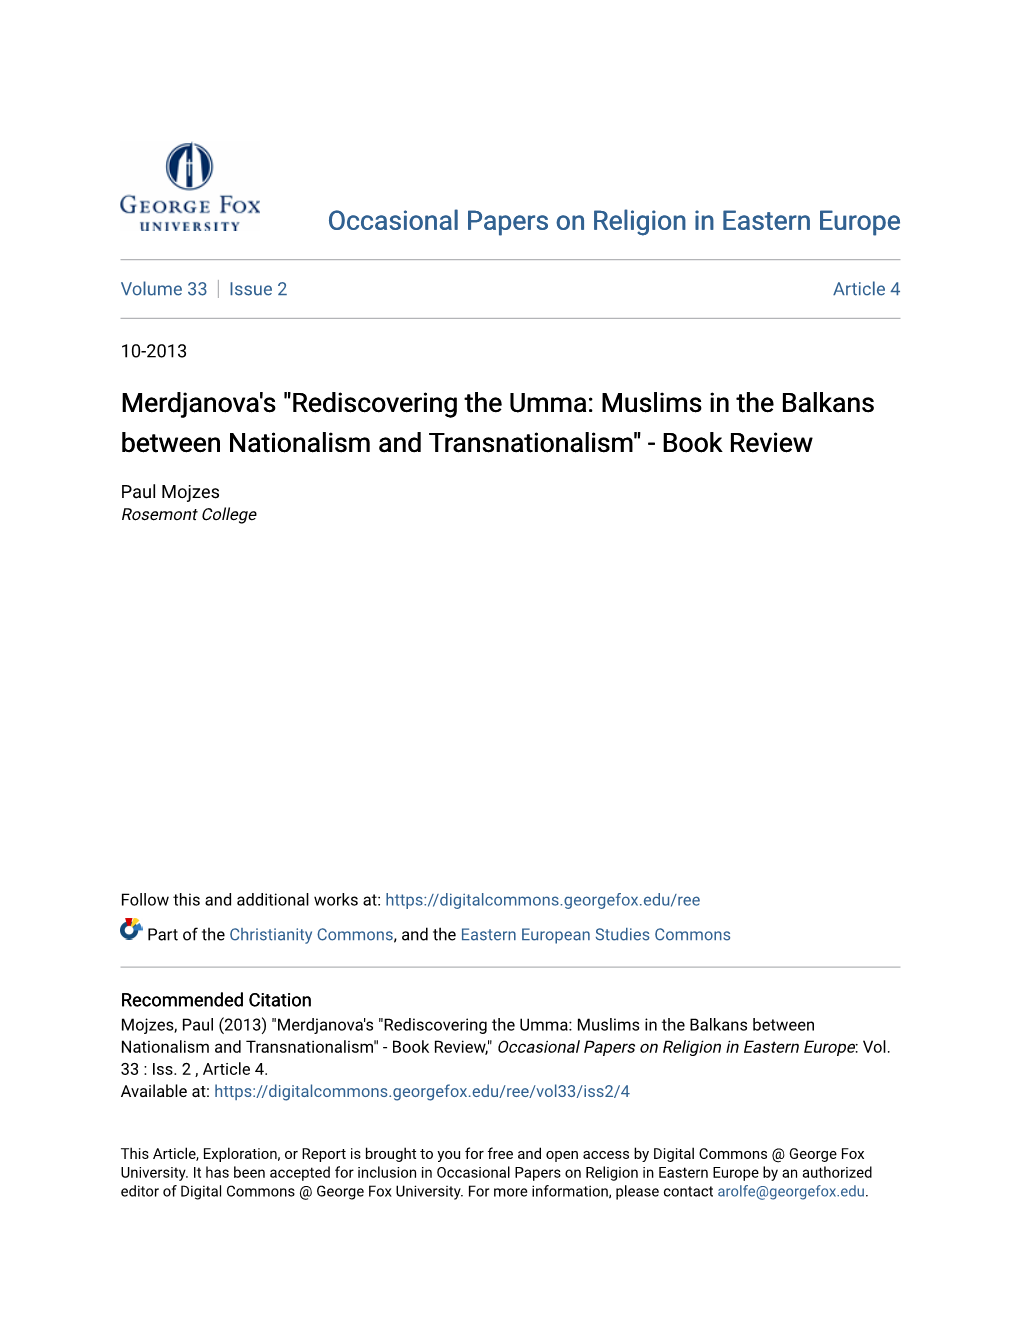 Merdjanova's "Rediscovering the Umma: Muslims in the Balkans Between Nationalism and Transnationalism" - Book Review